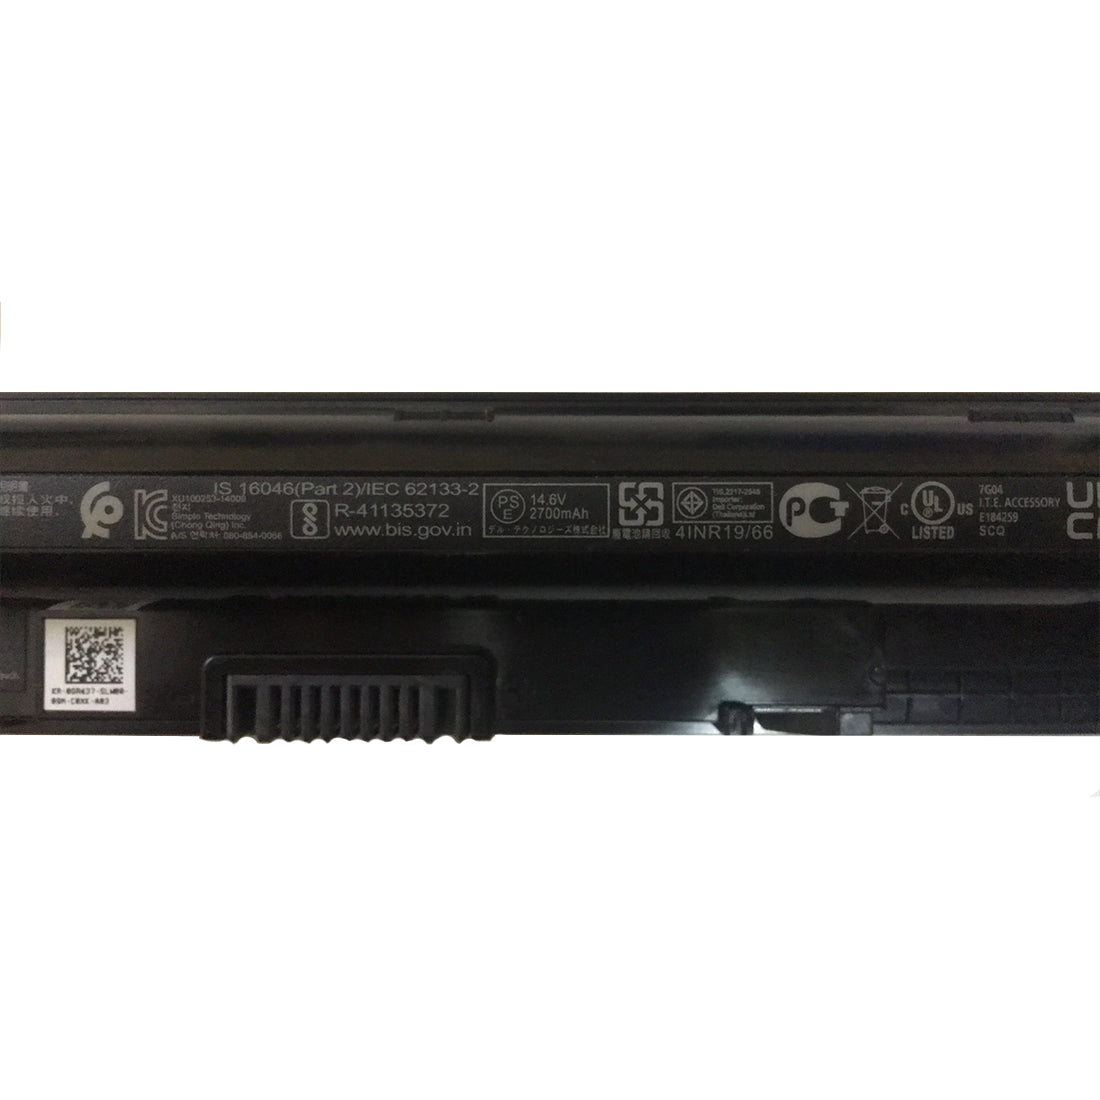 Dell Original 2700mAh 14.6V 40WHr 4-Cell Laptop Battery for Inspiron 15 3559